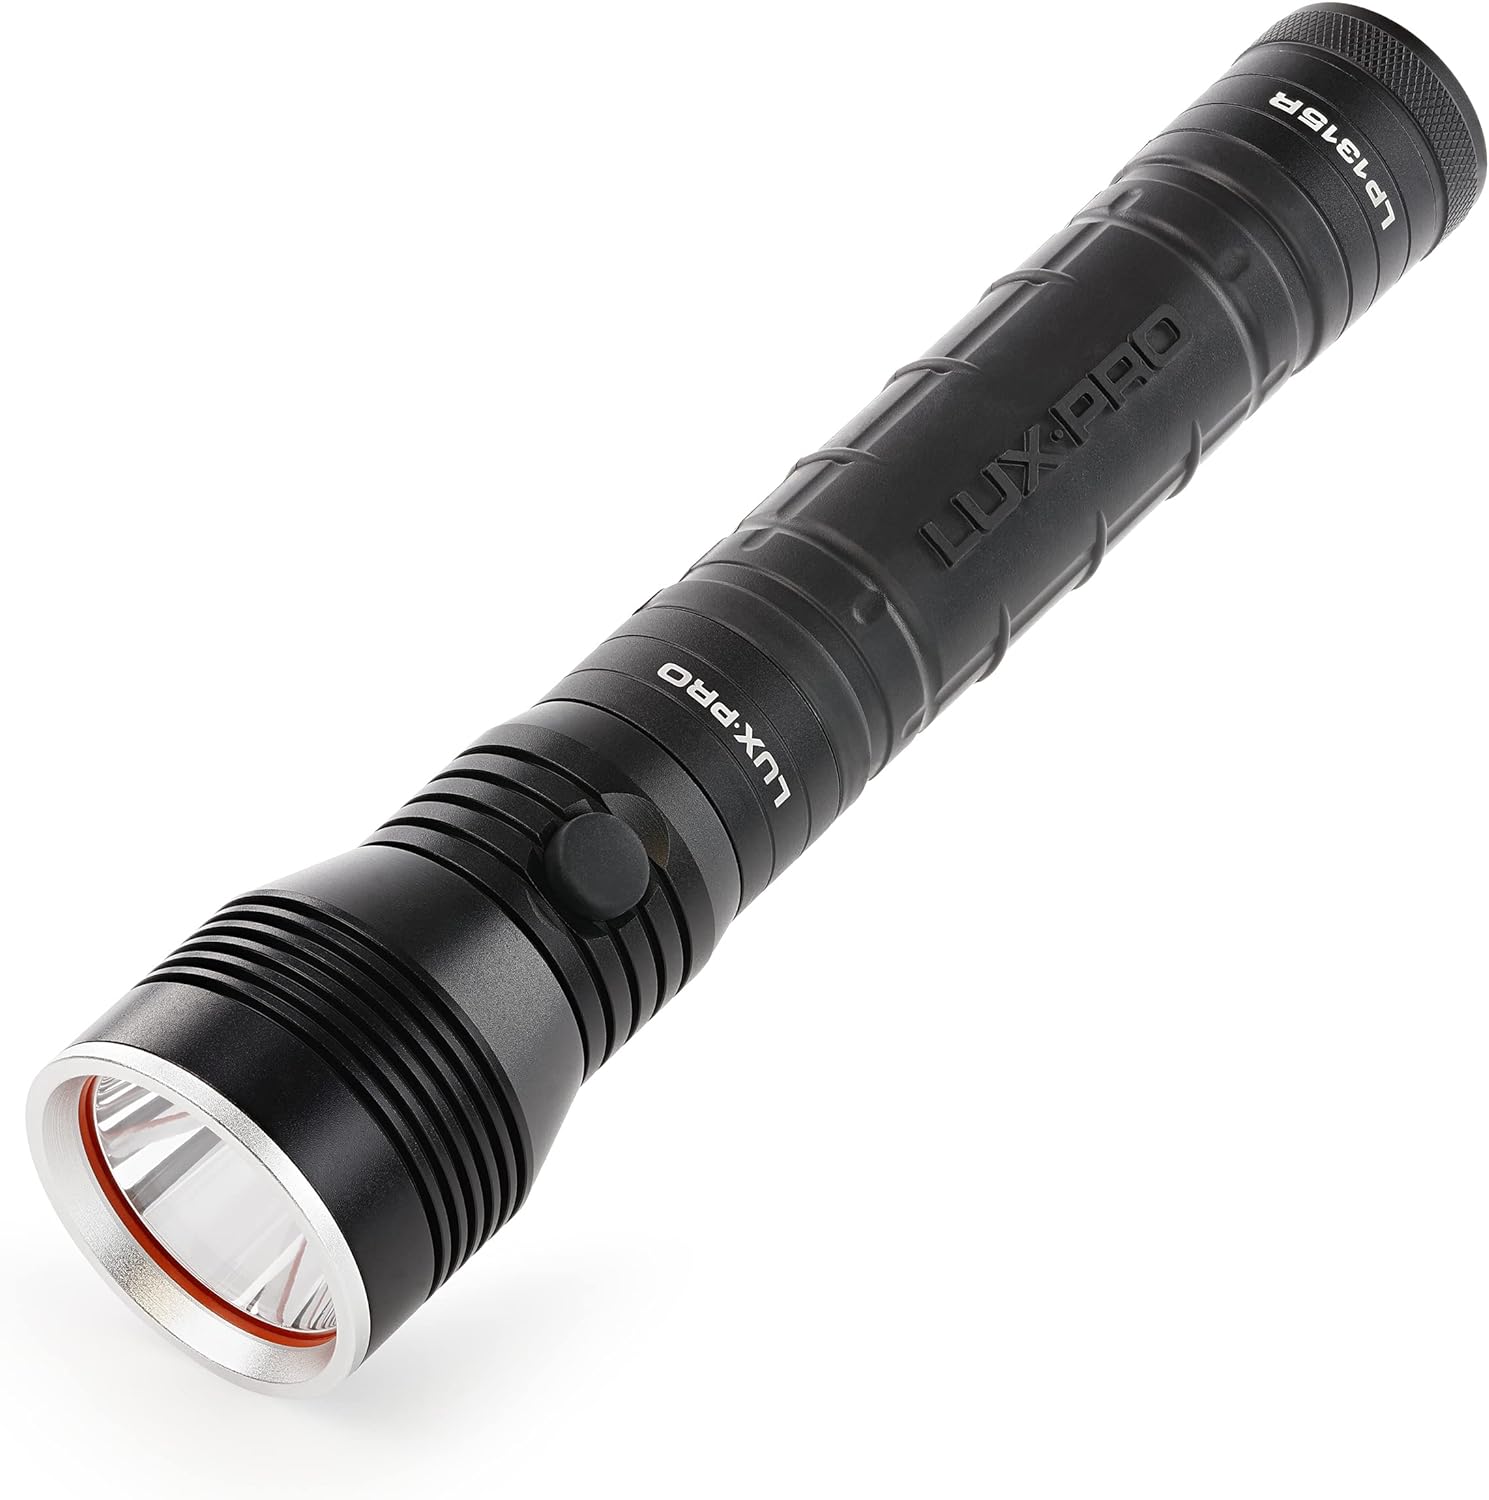 LuxPro Heavy-Duty LED Flashlight, 1650 Lumens